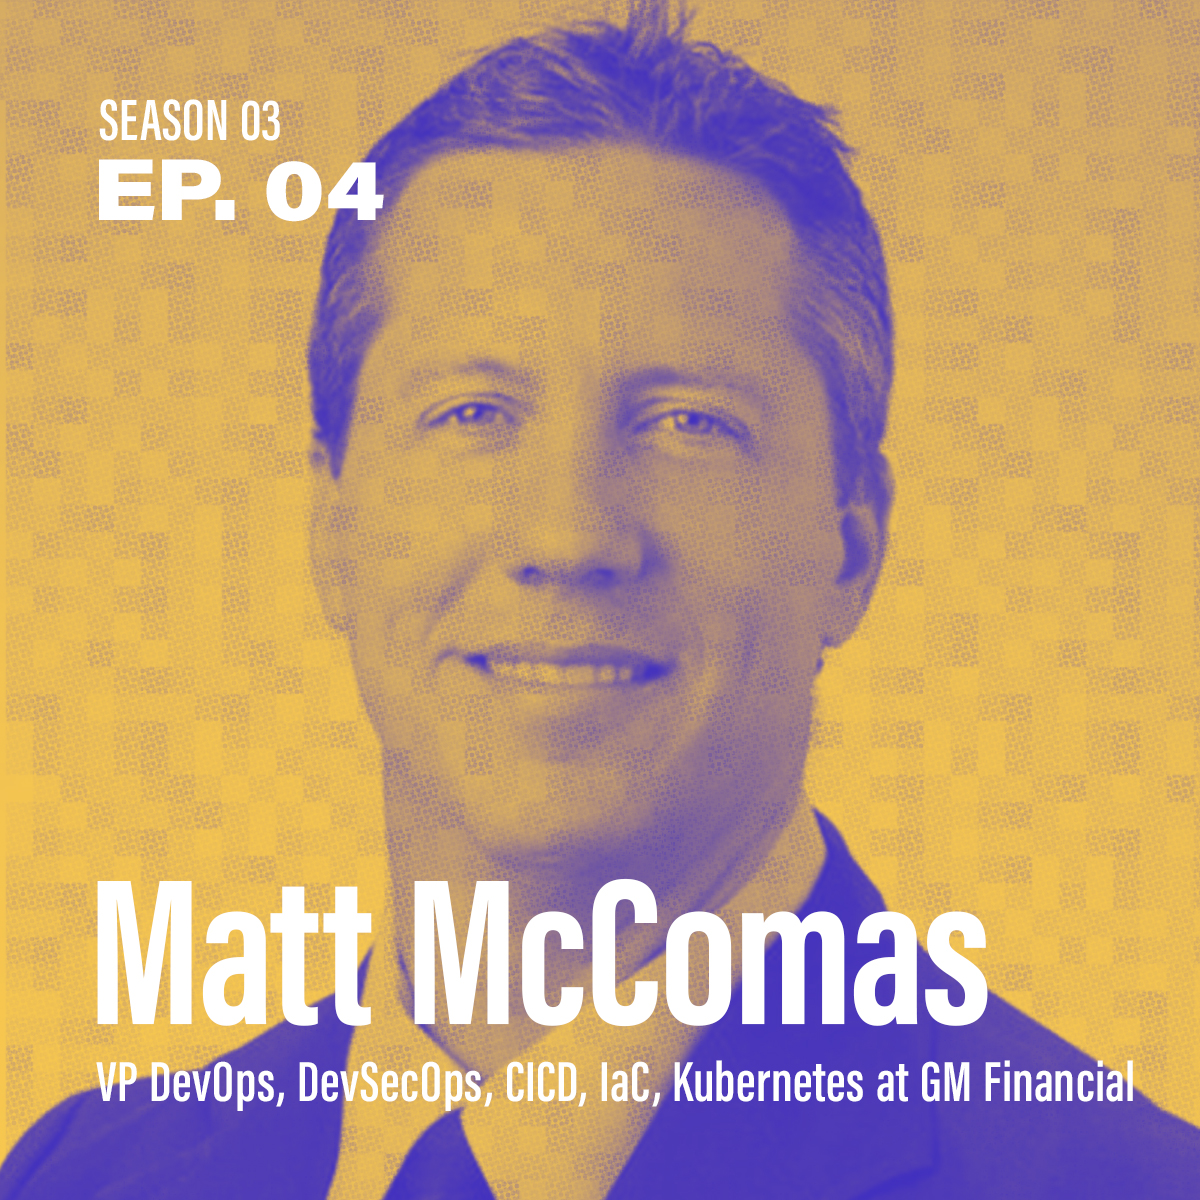 Season 3, Episode 4 - "Is a slow cloud adoption better?" with Matt McComas, VP of DevOps, GM Financial